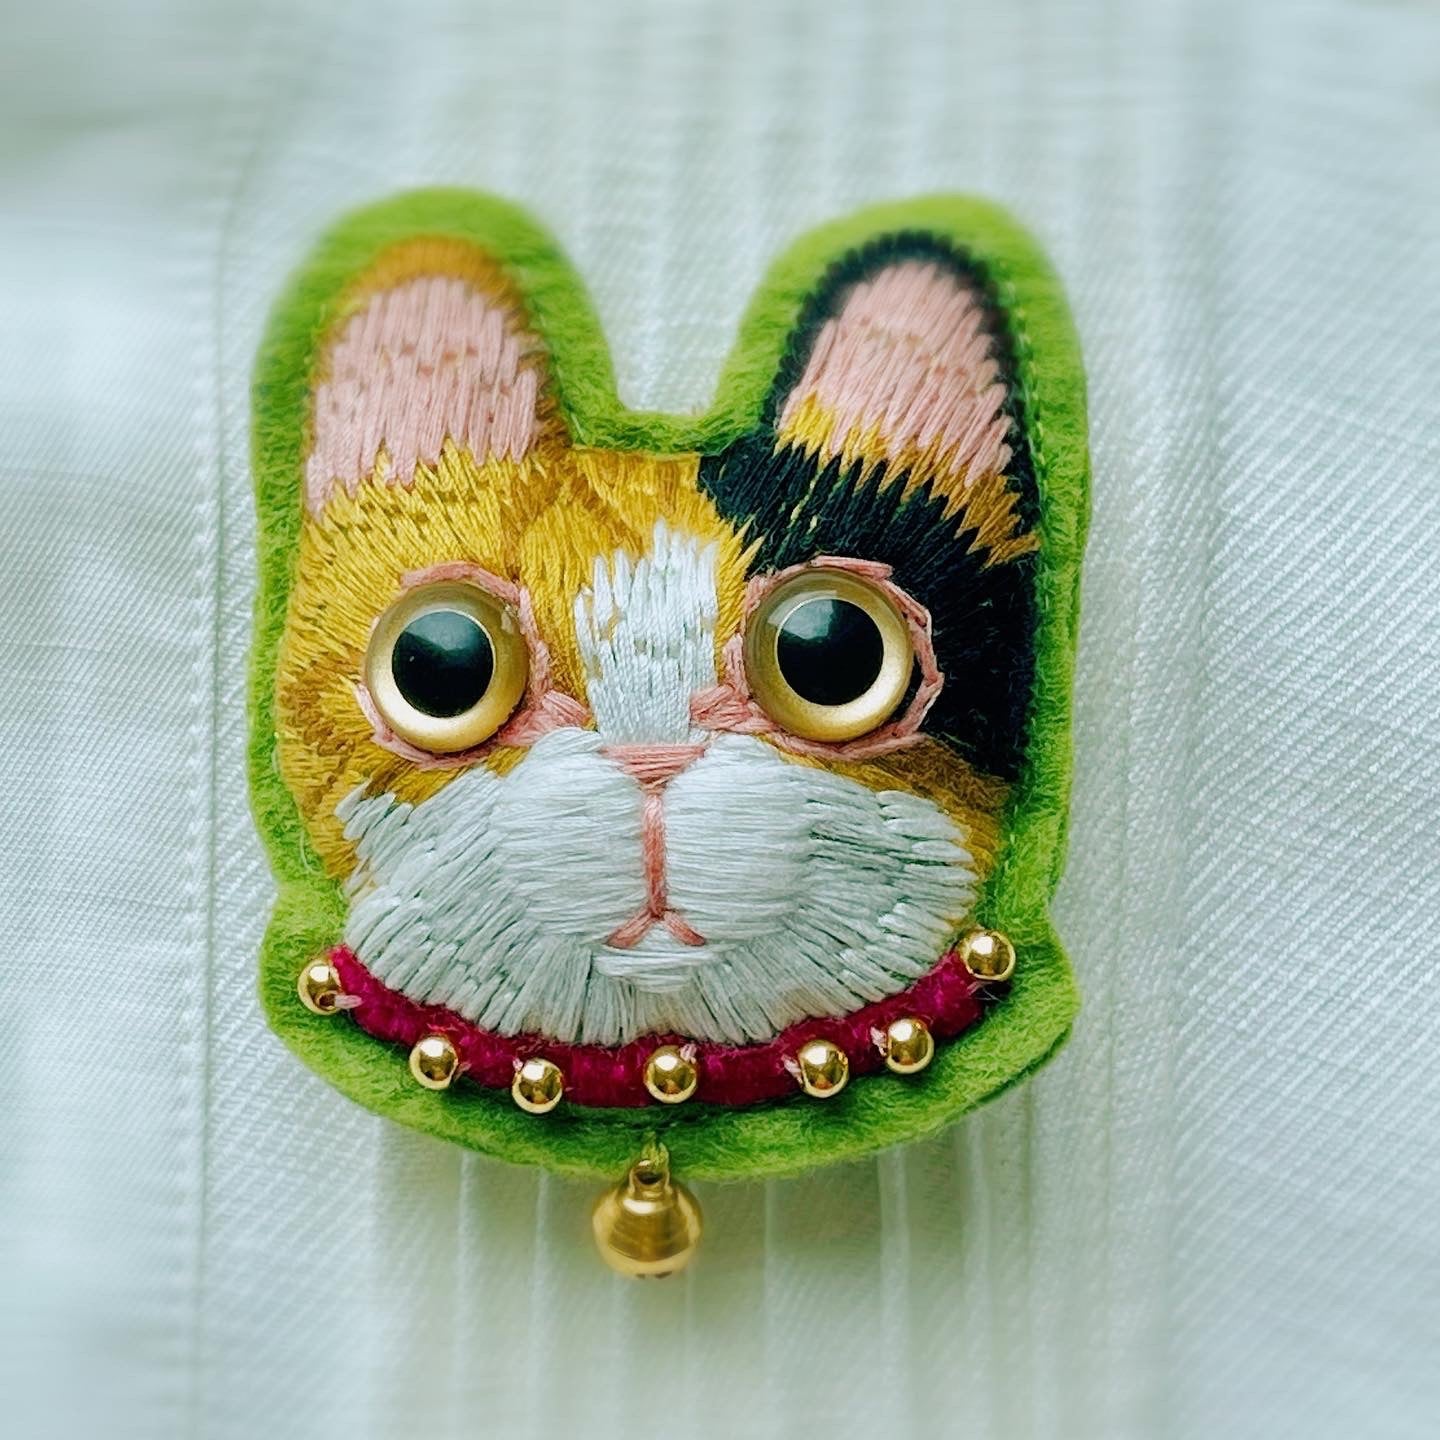 Calico Cat Handmade Yarn Brooch